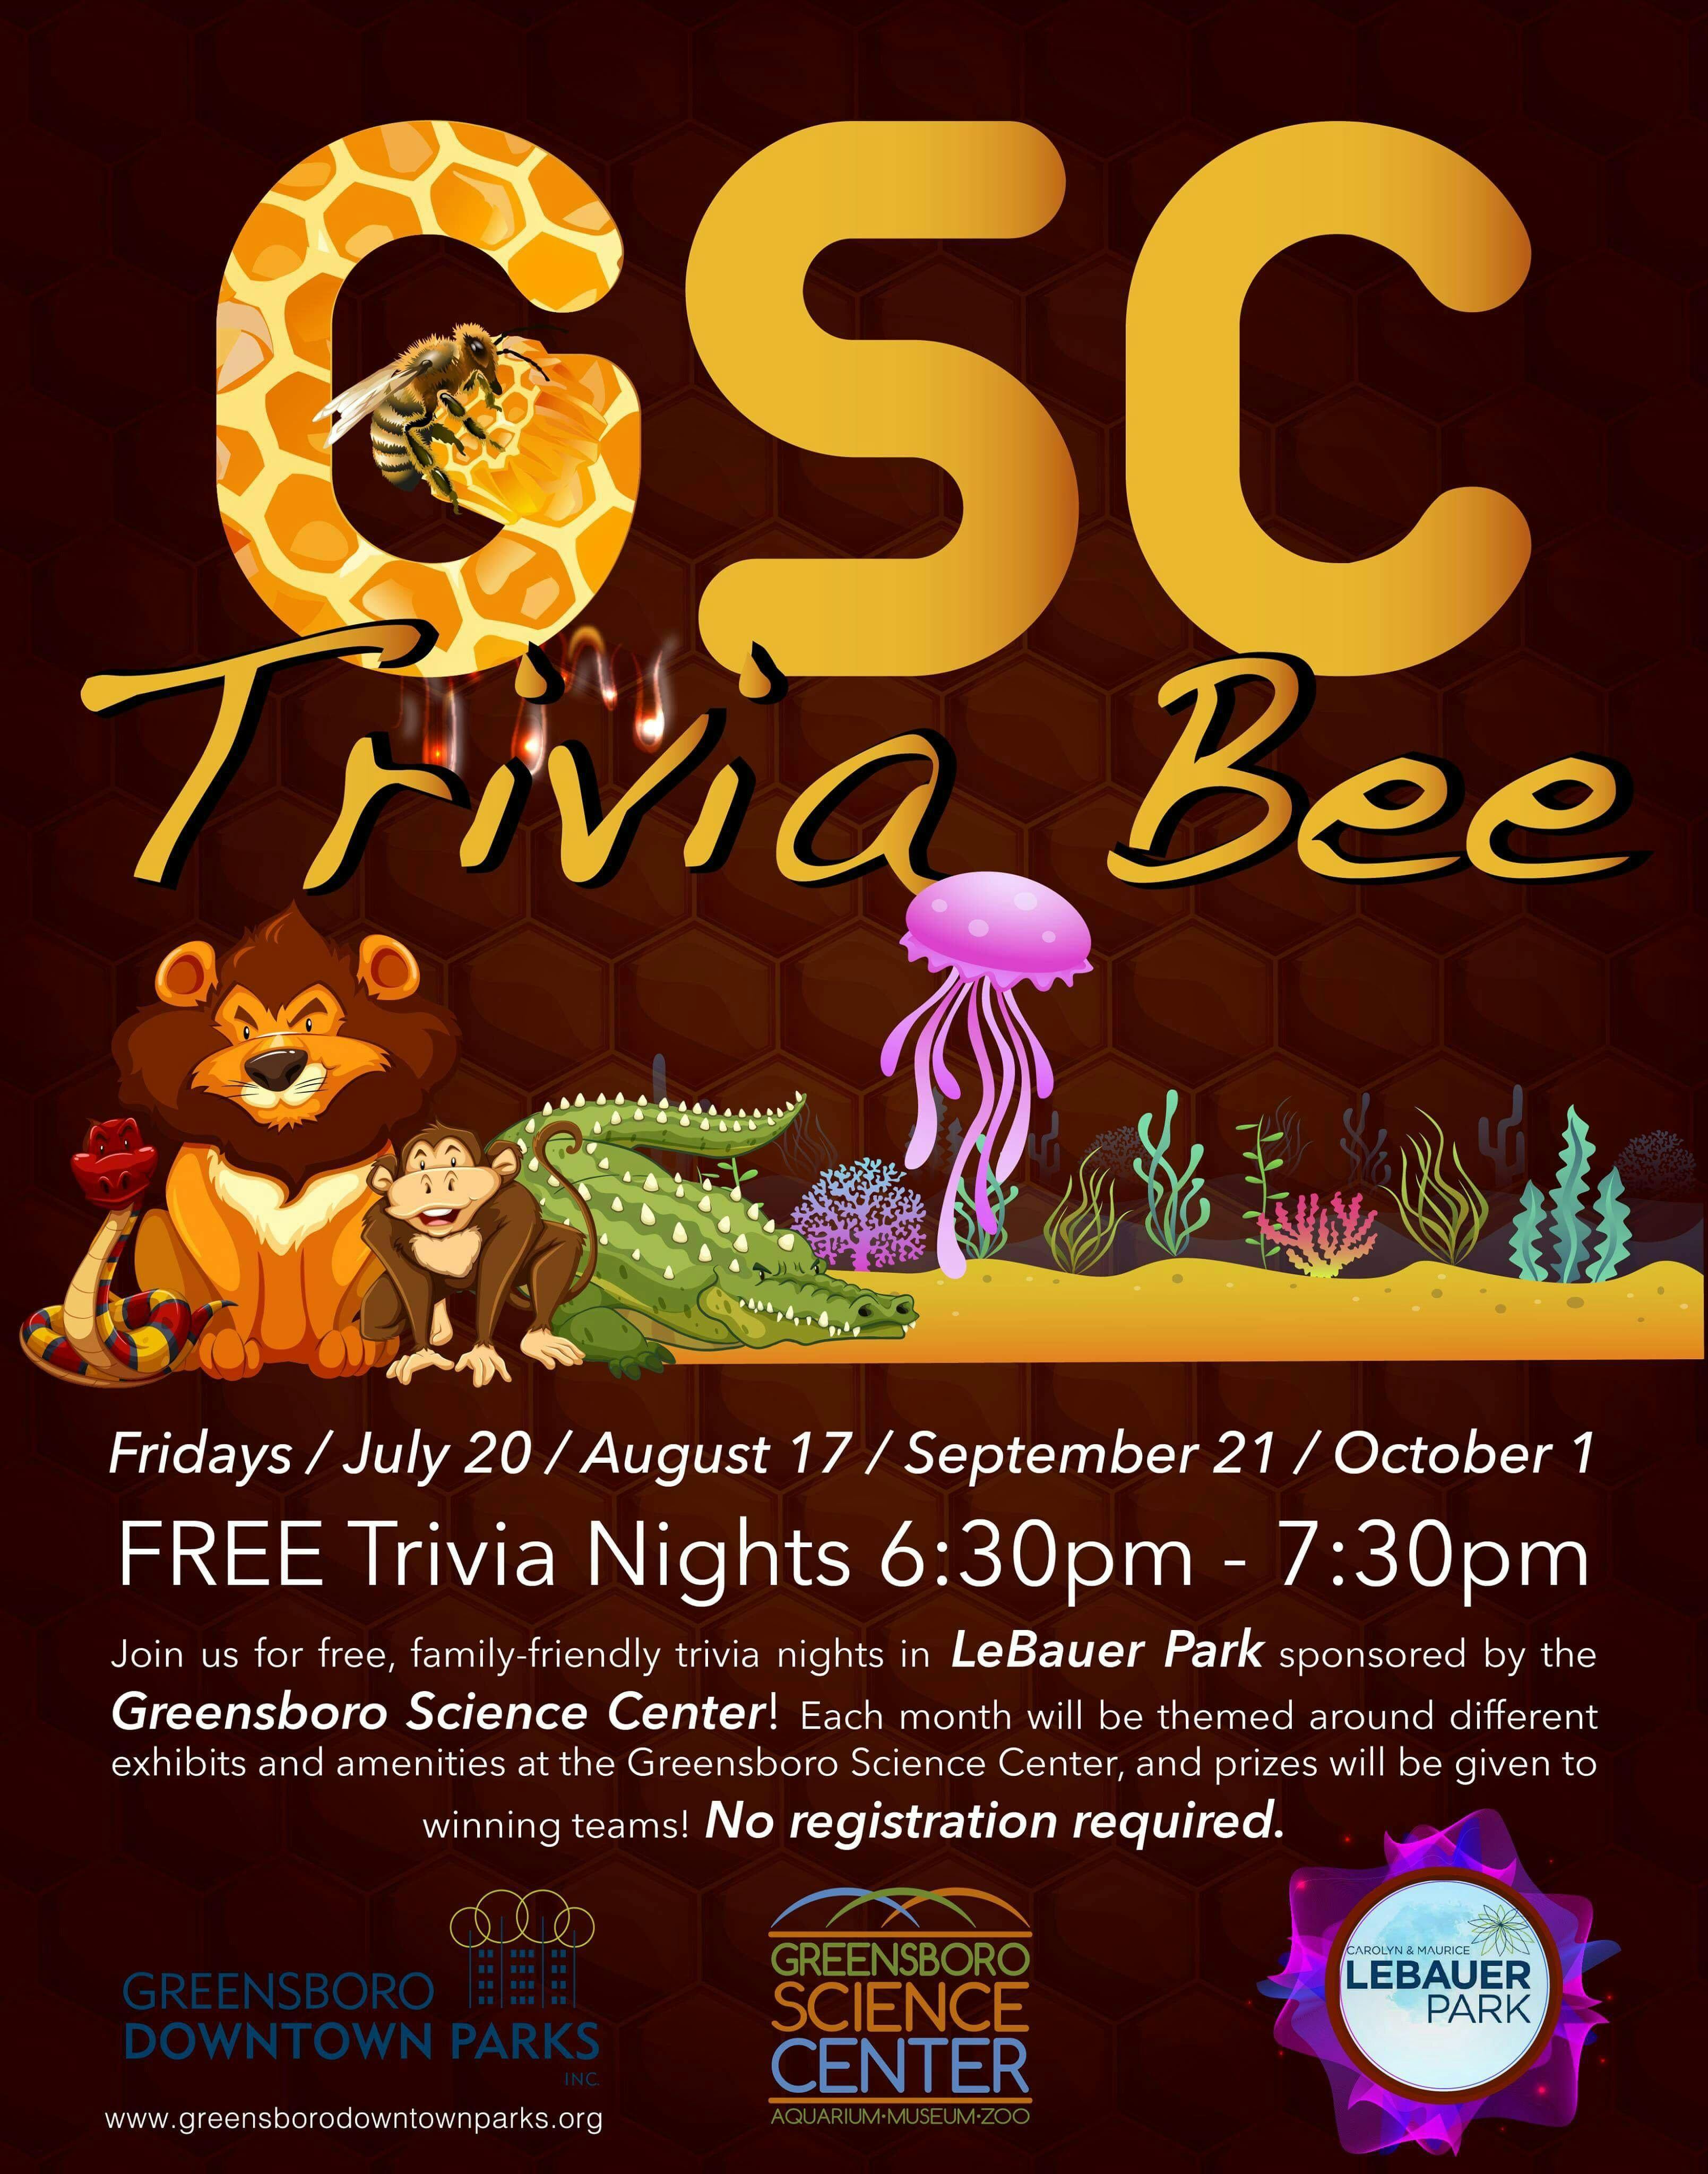 GSC Trivia Bee